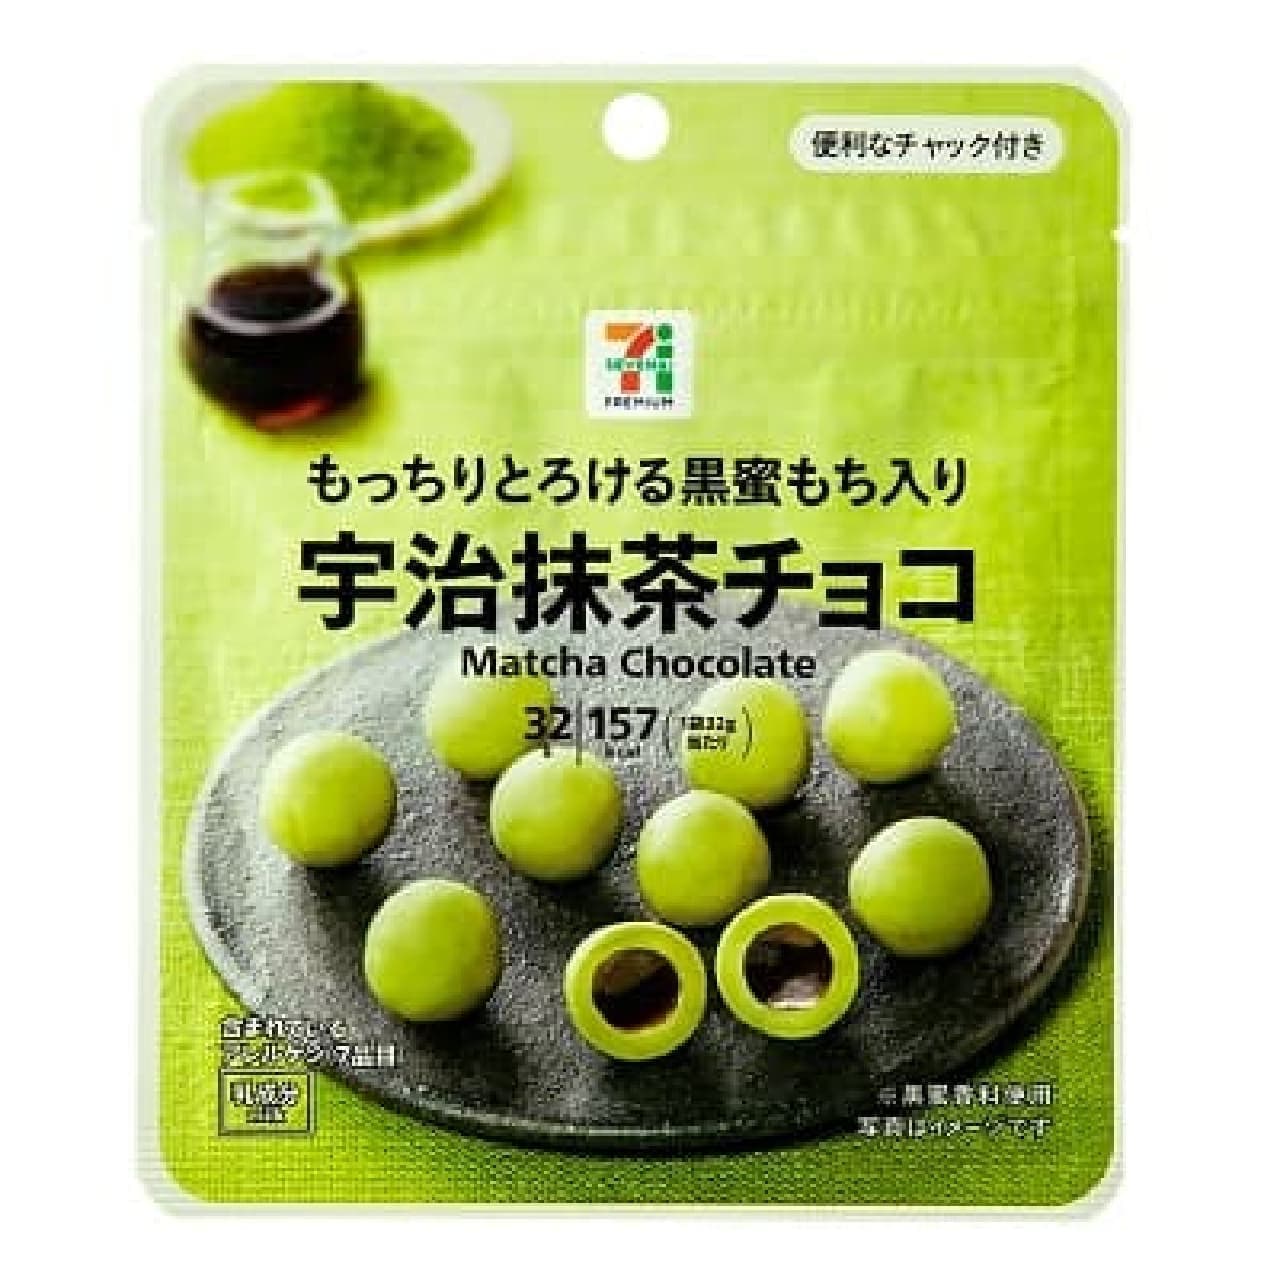 7-ELEVEN "Mochiru Melt Kuromitsu Kuromitsu Mochi-infused Matcha Chocolate